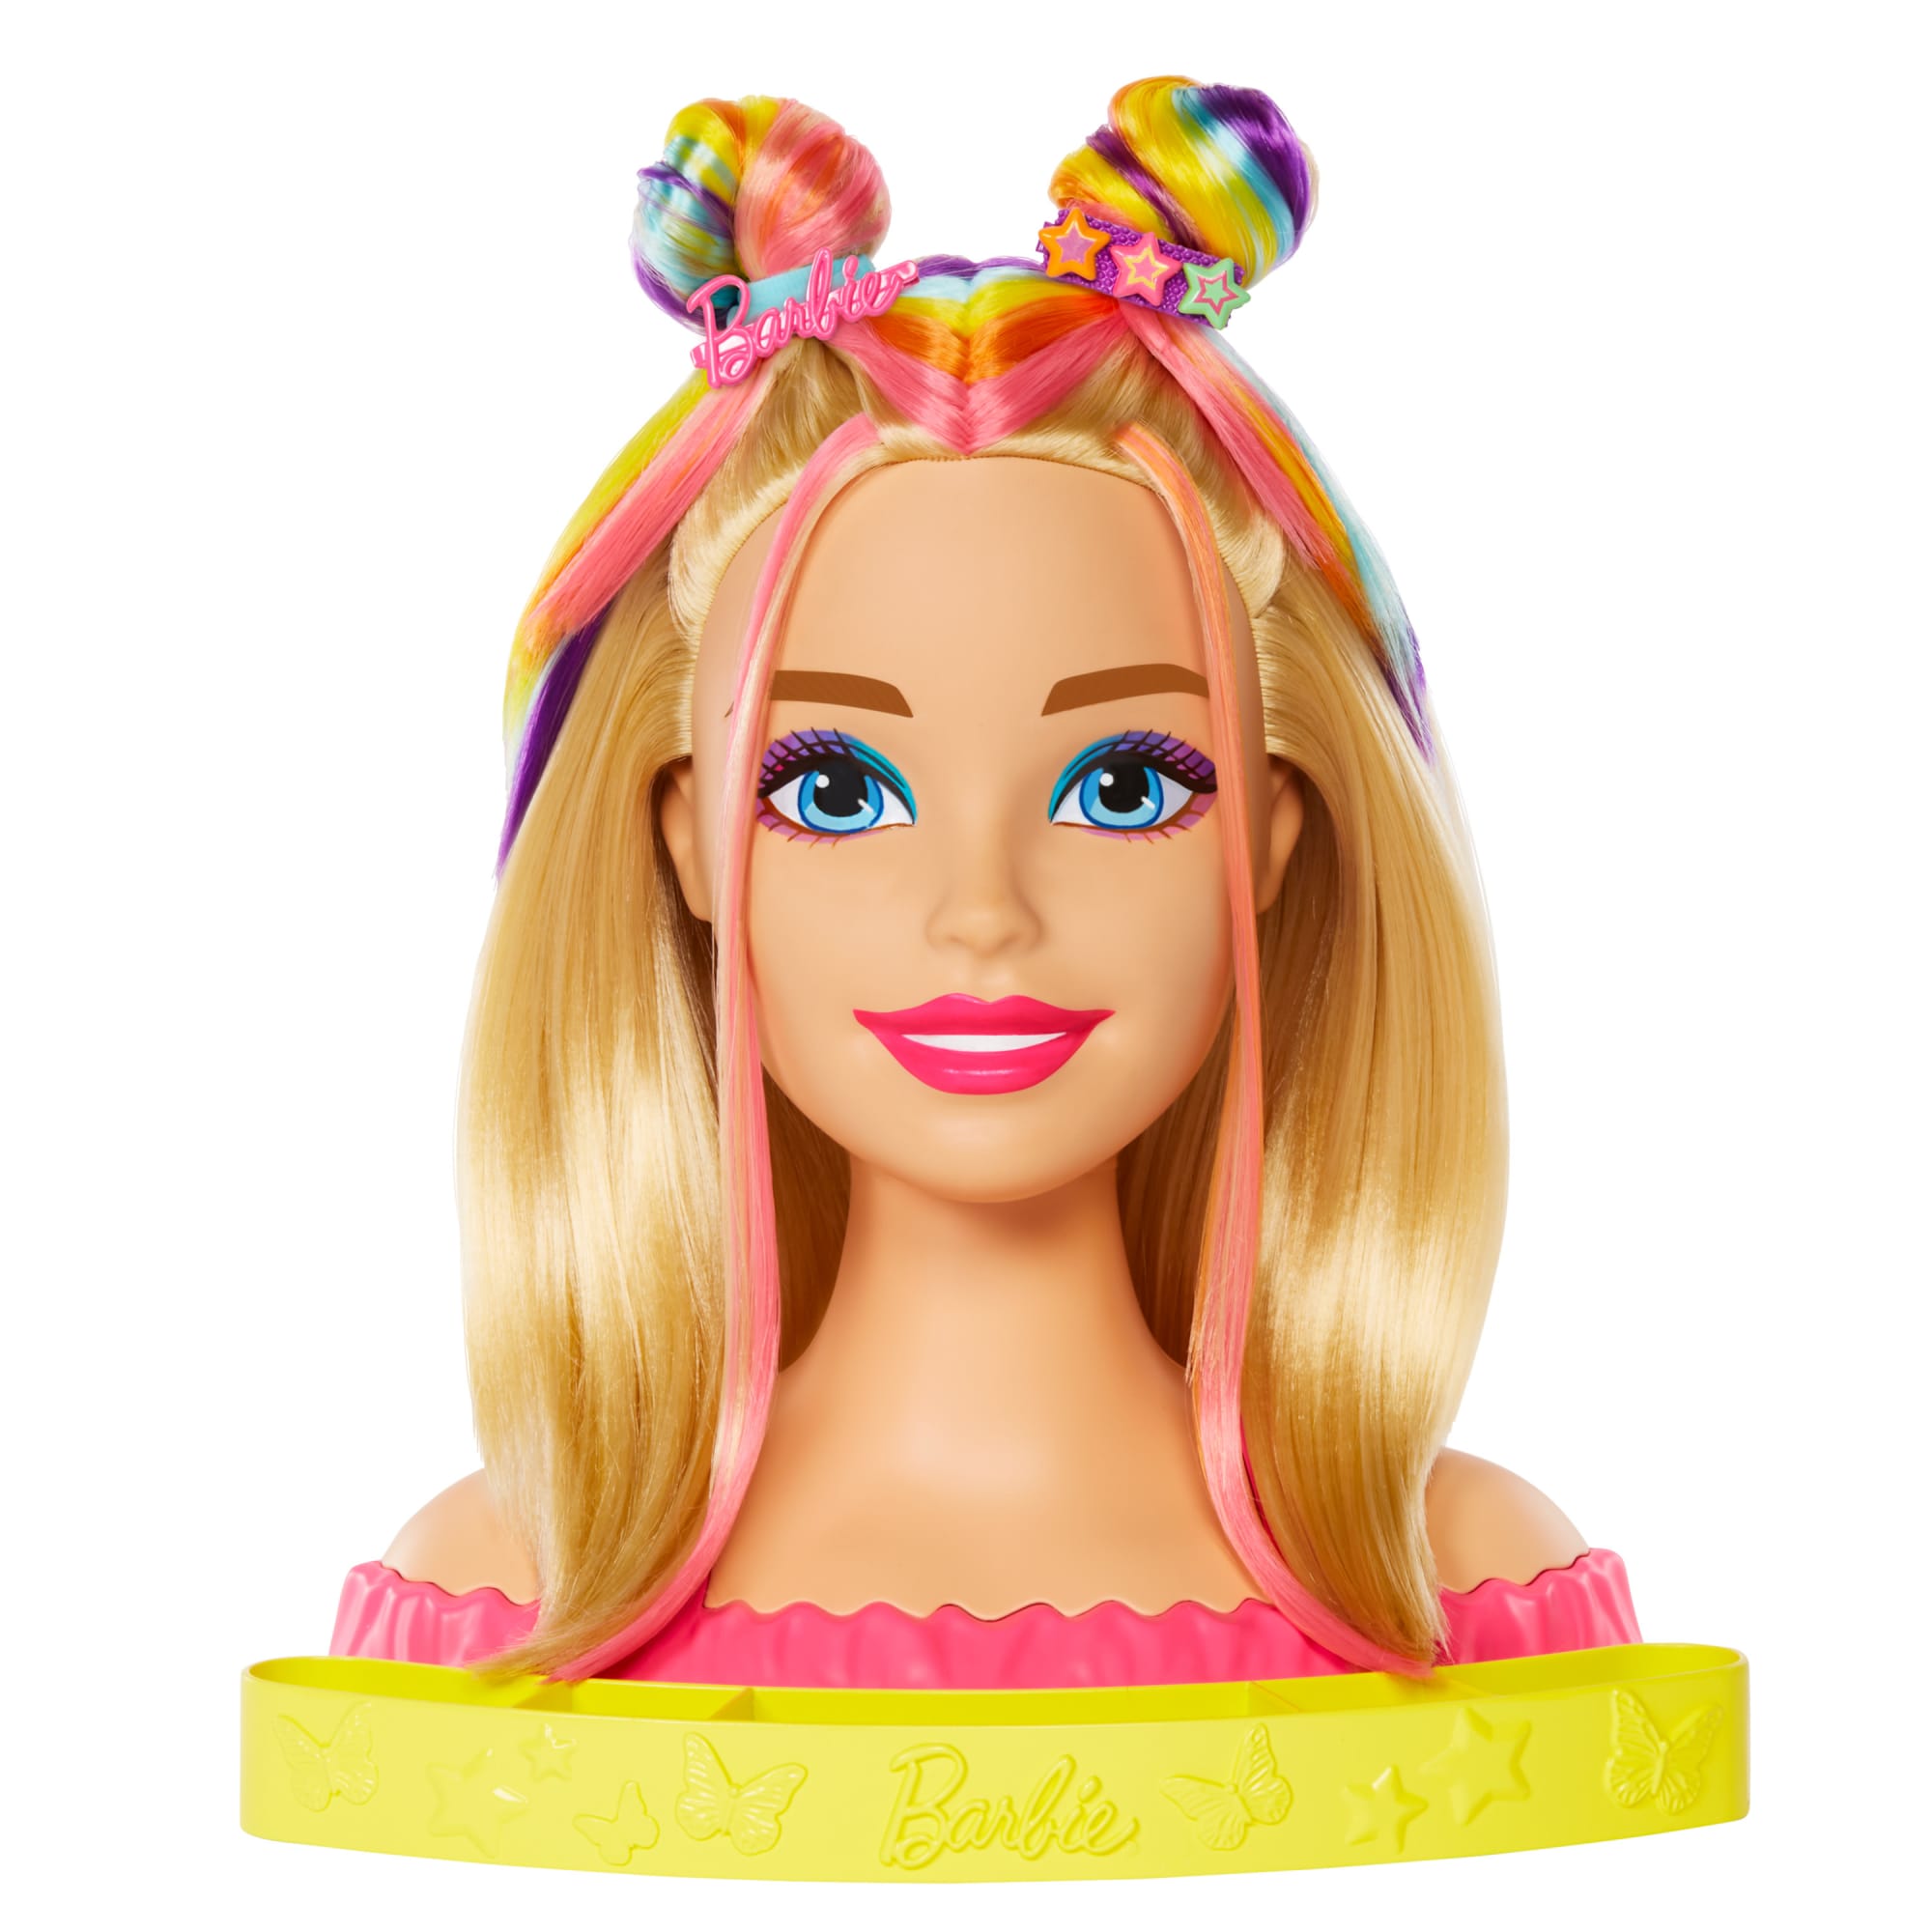 Barbie Deluxe Styling Head, Blonde Rainbow Hair